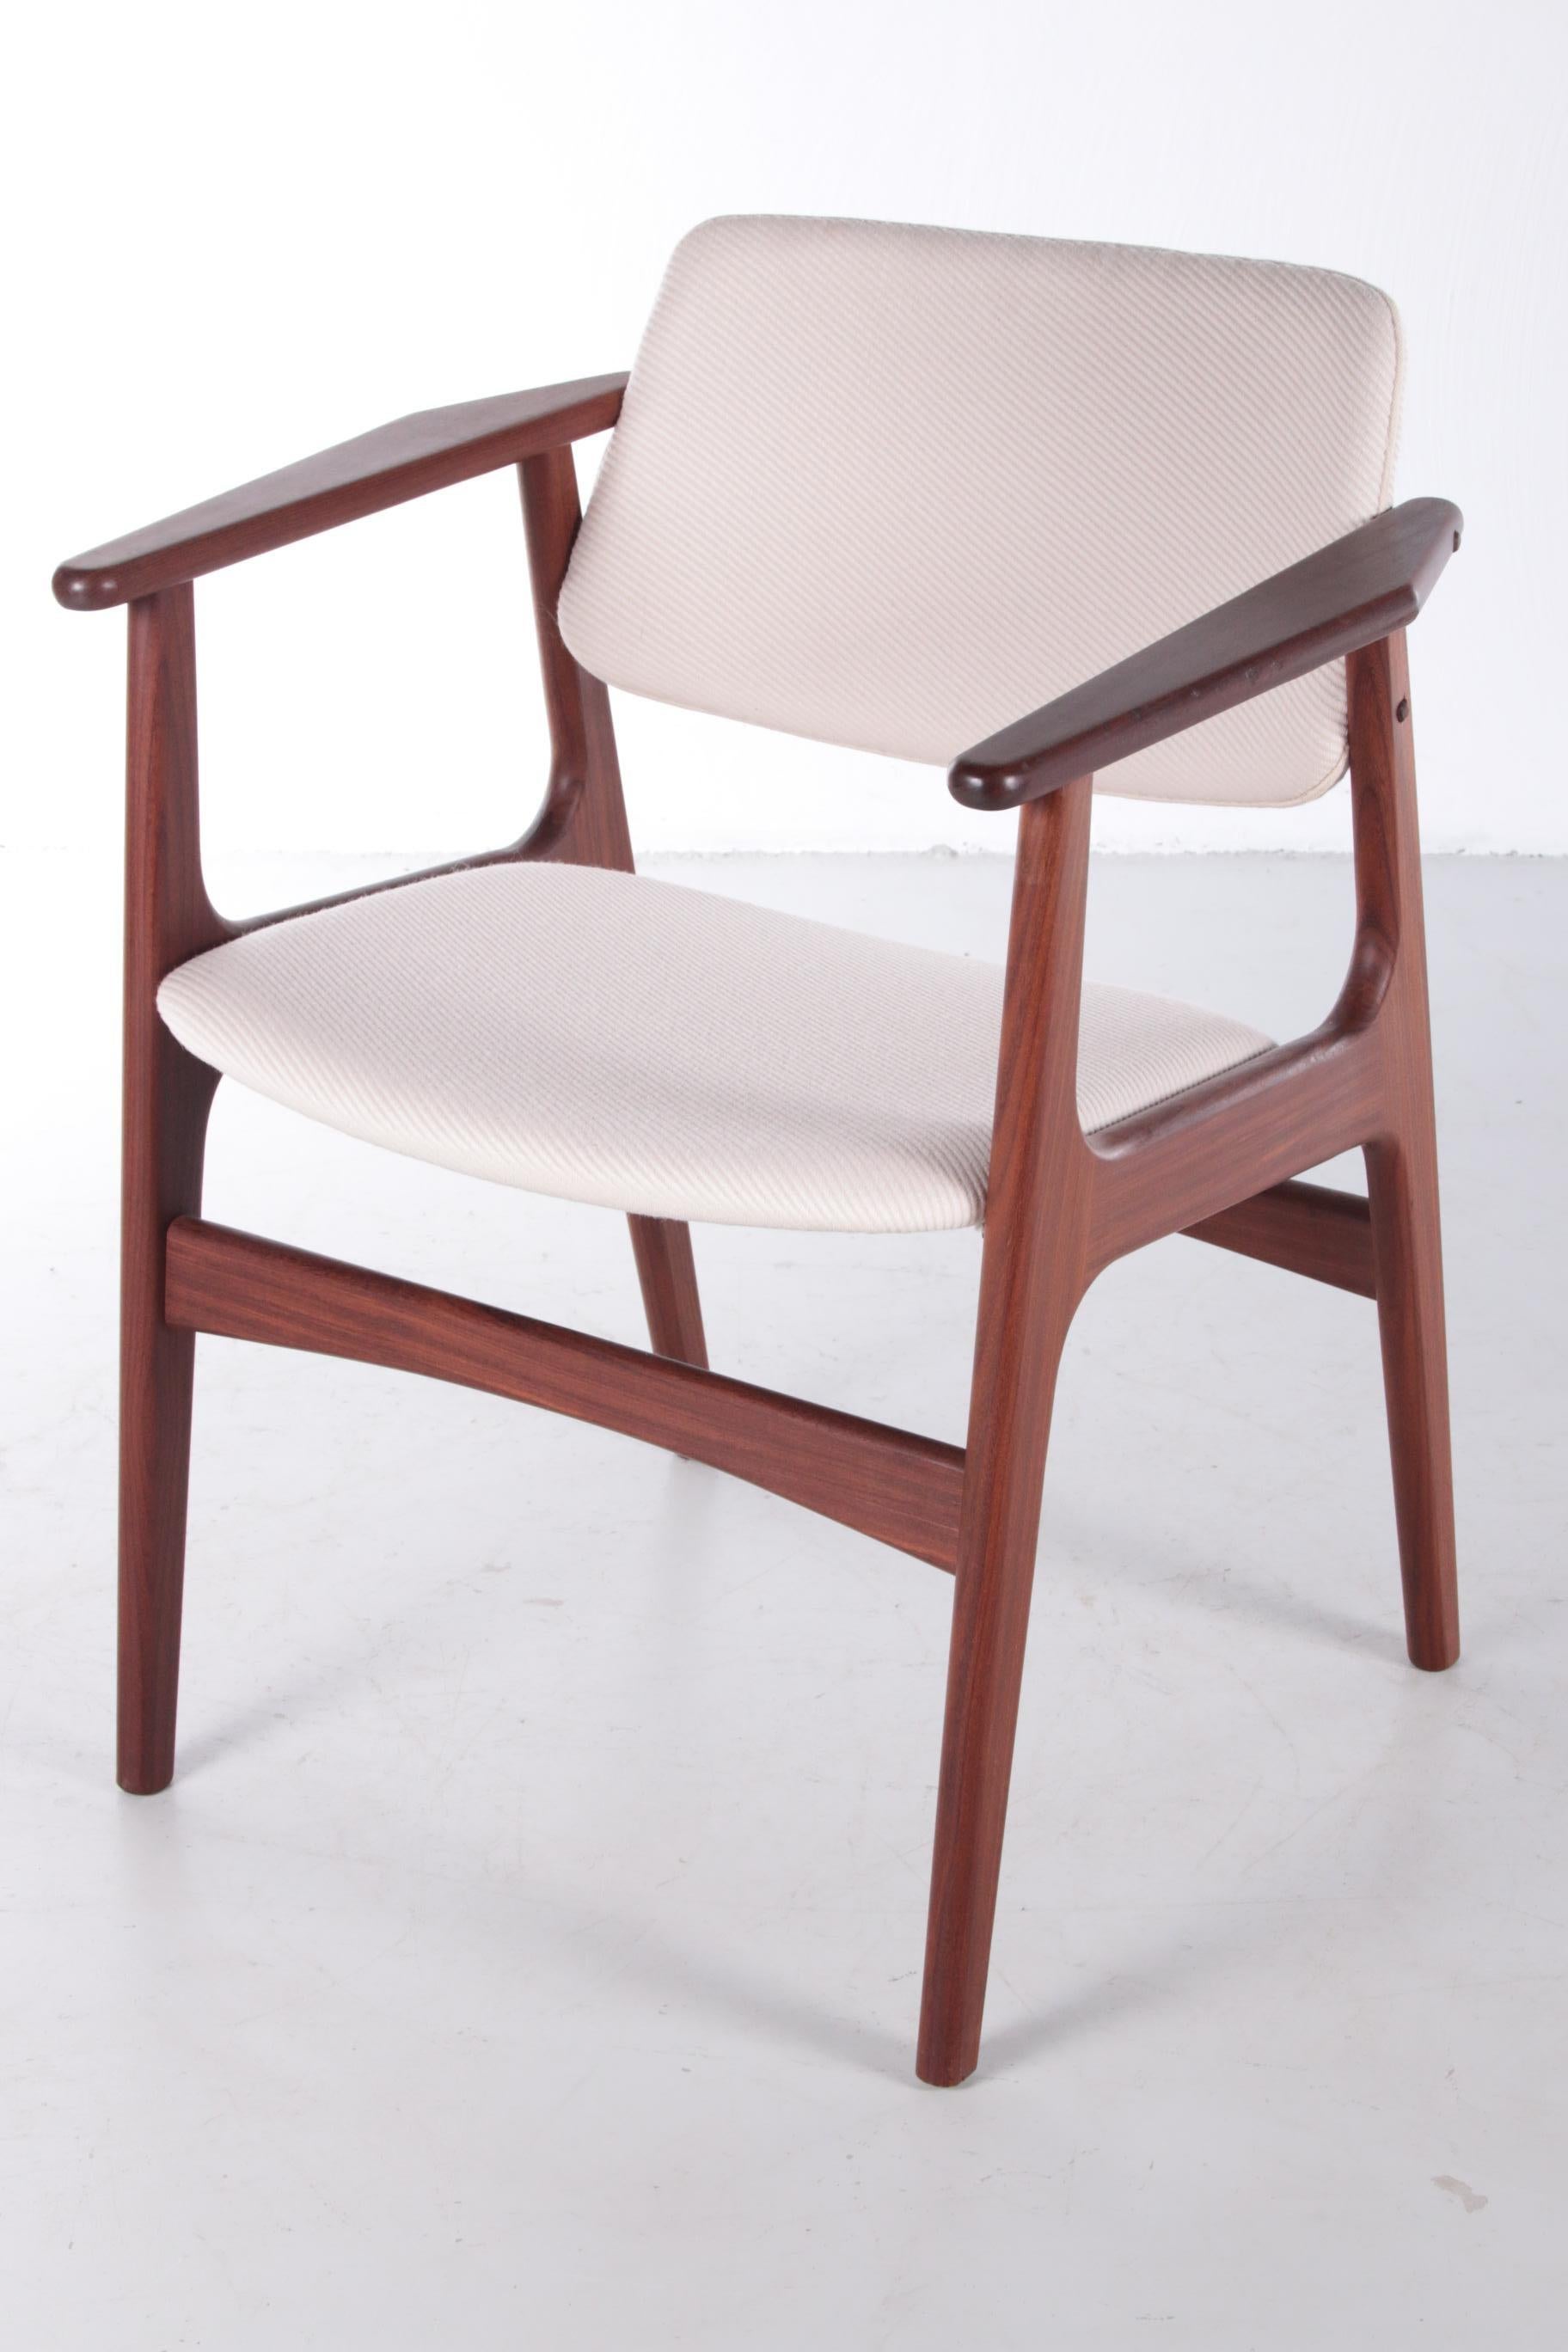 Mid-20th Century Arne Vodder Dining Room Chairs Set of 4 Denmark 60s